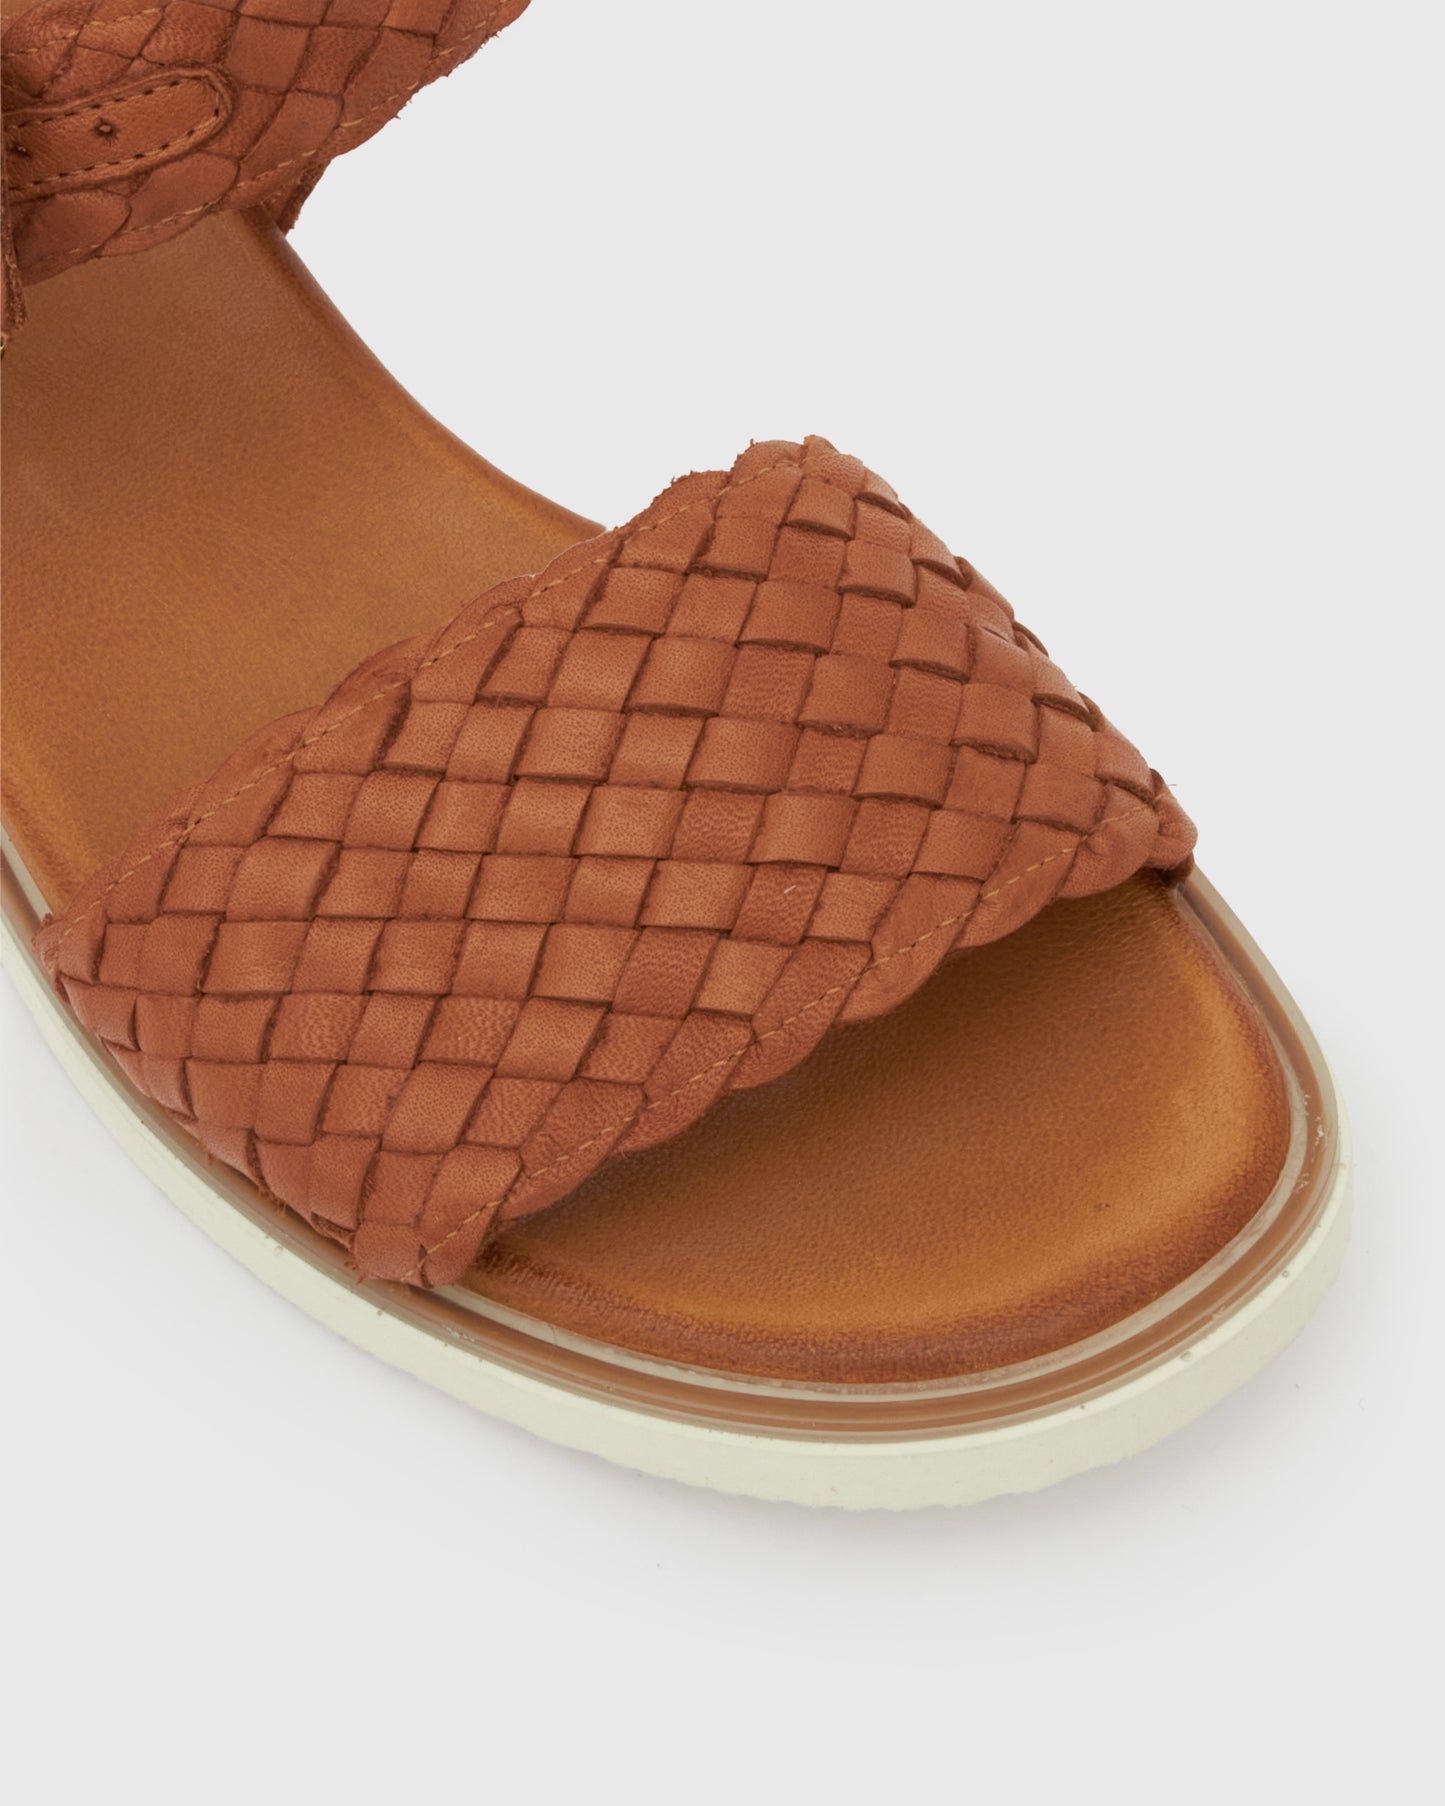 FREYA Leather Low Wedge Sandal